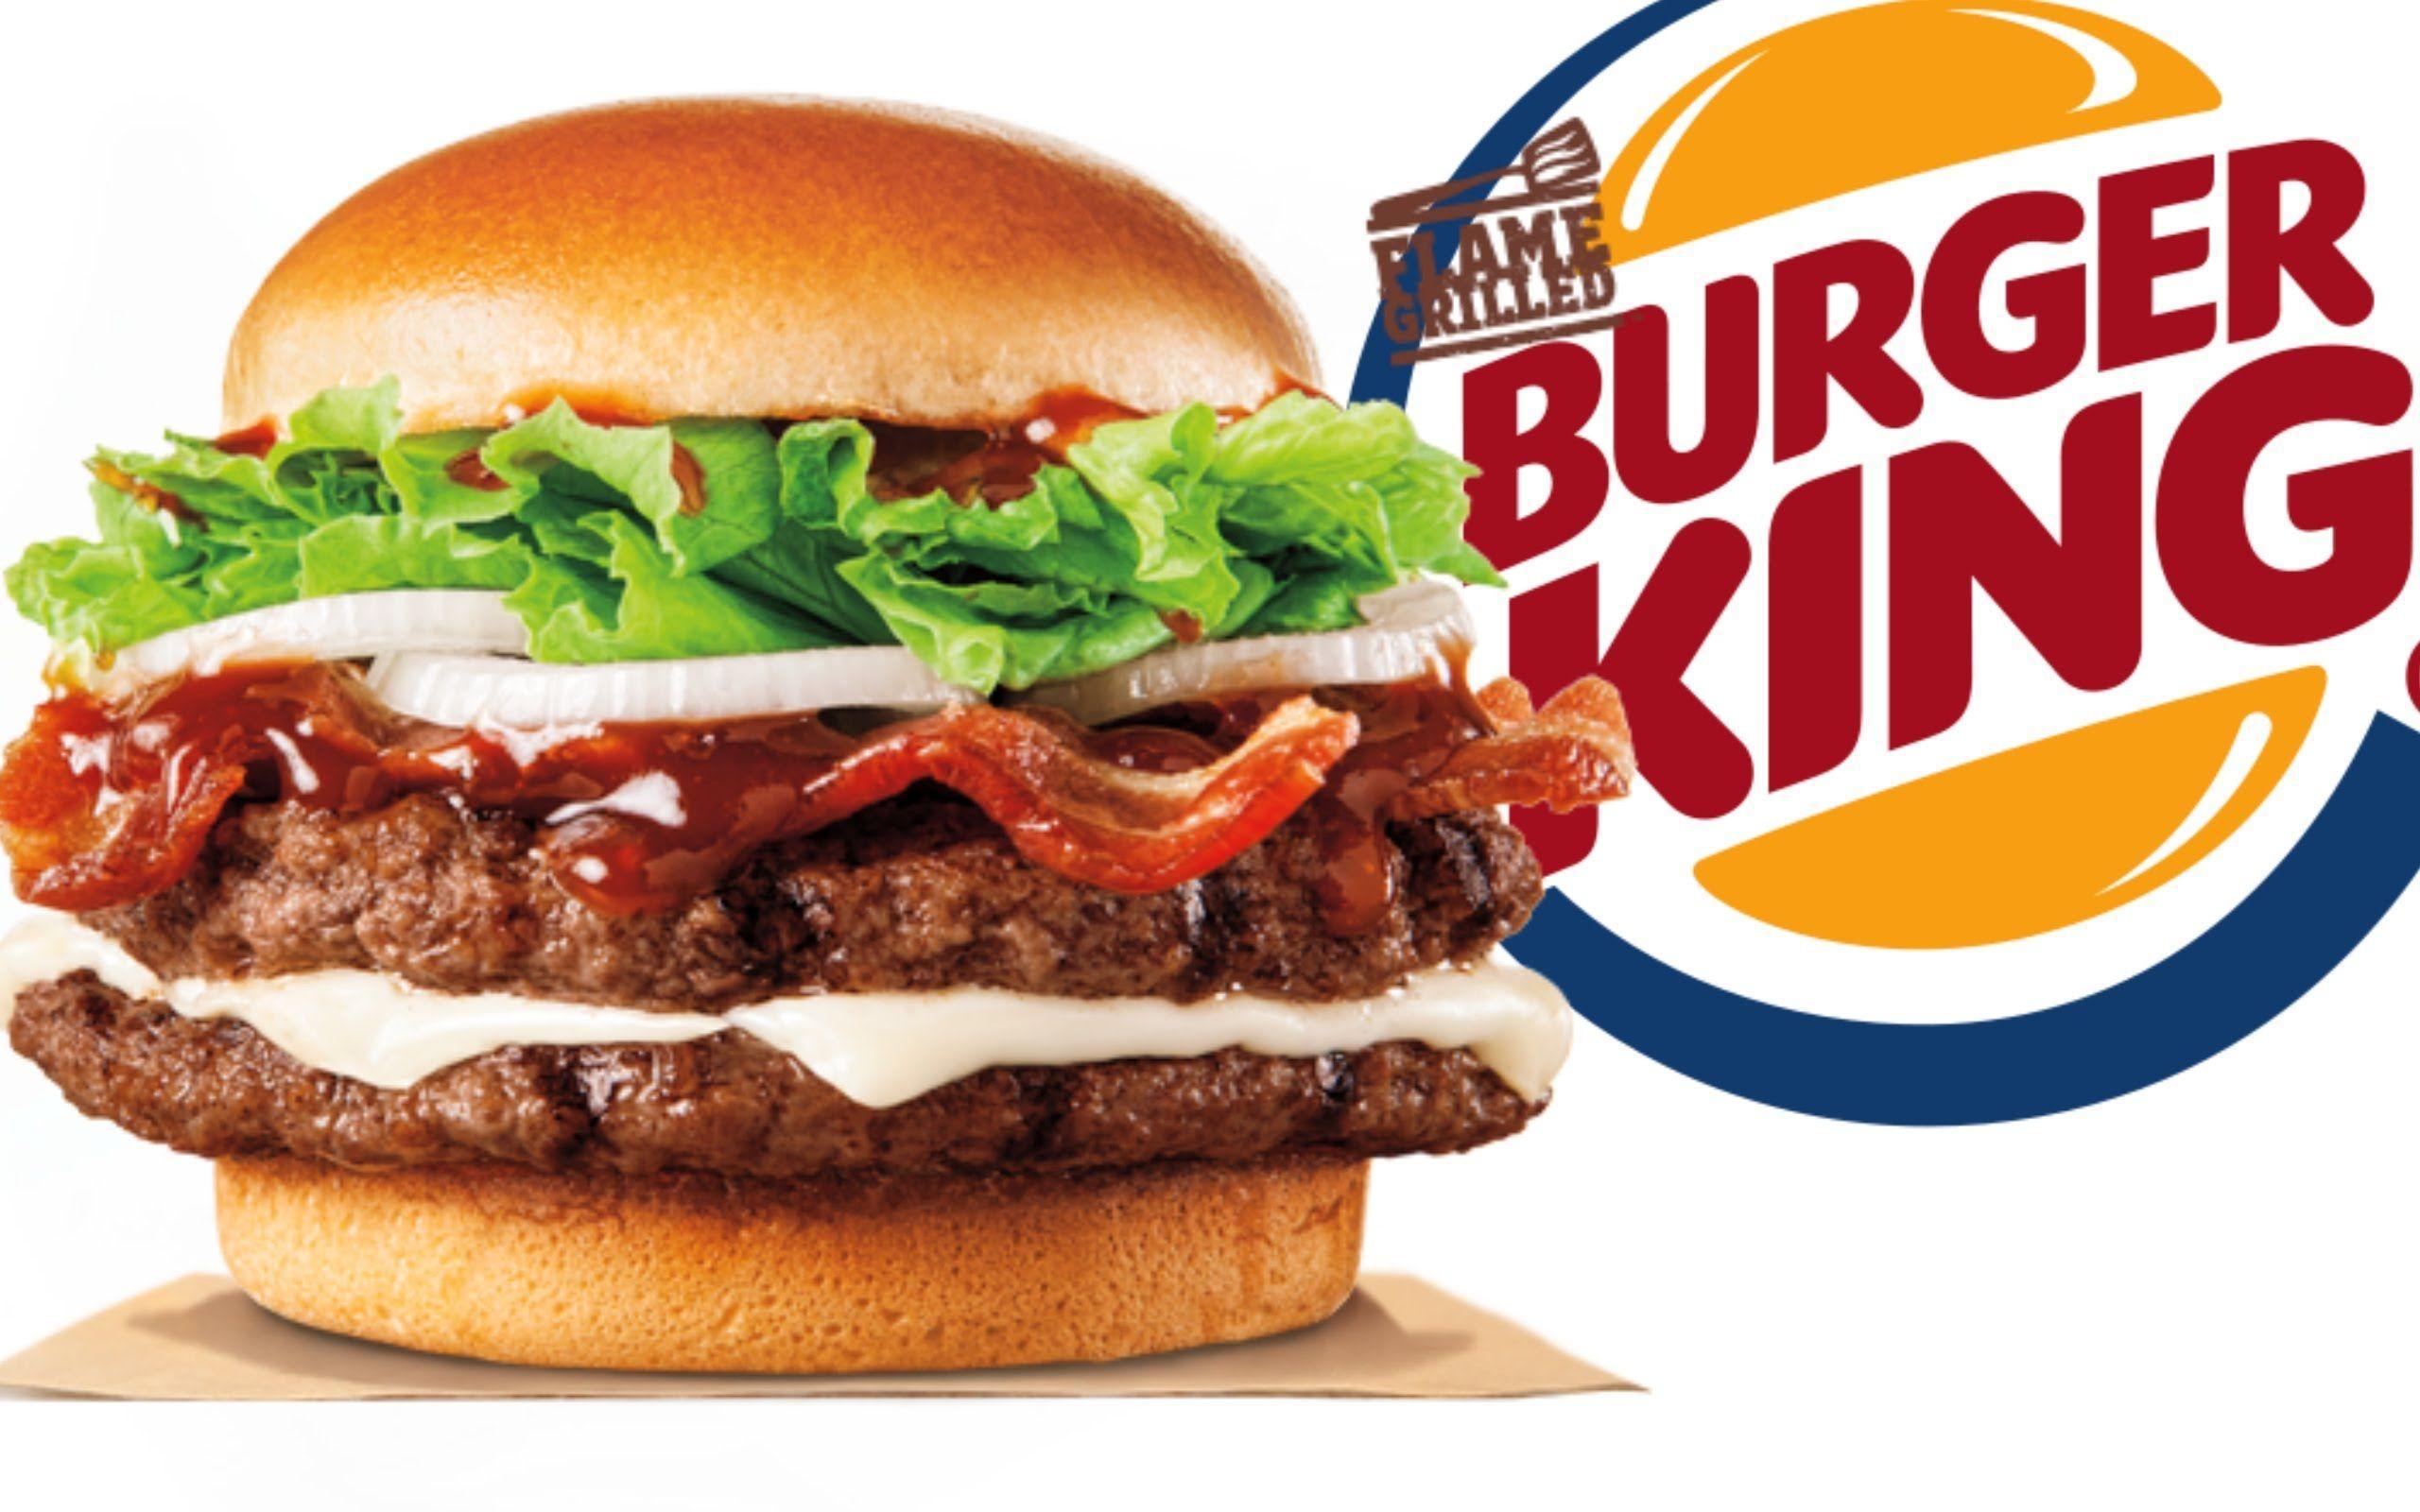 Burger King 4K Ultra Hd Wallpapers